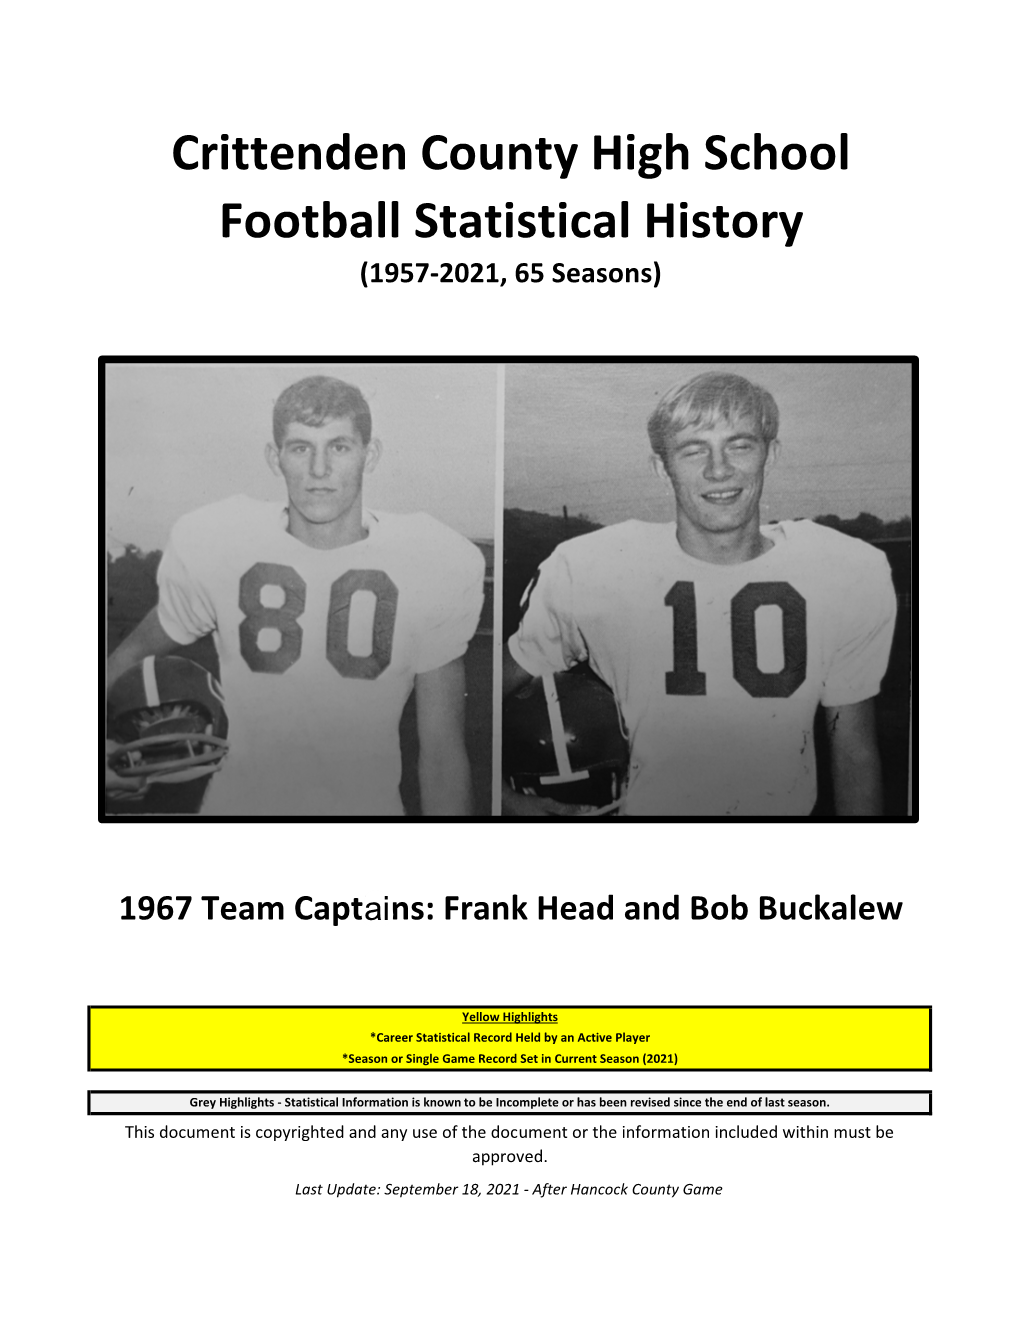 Football Statistical History Crittenden County High School